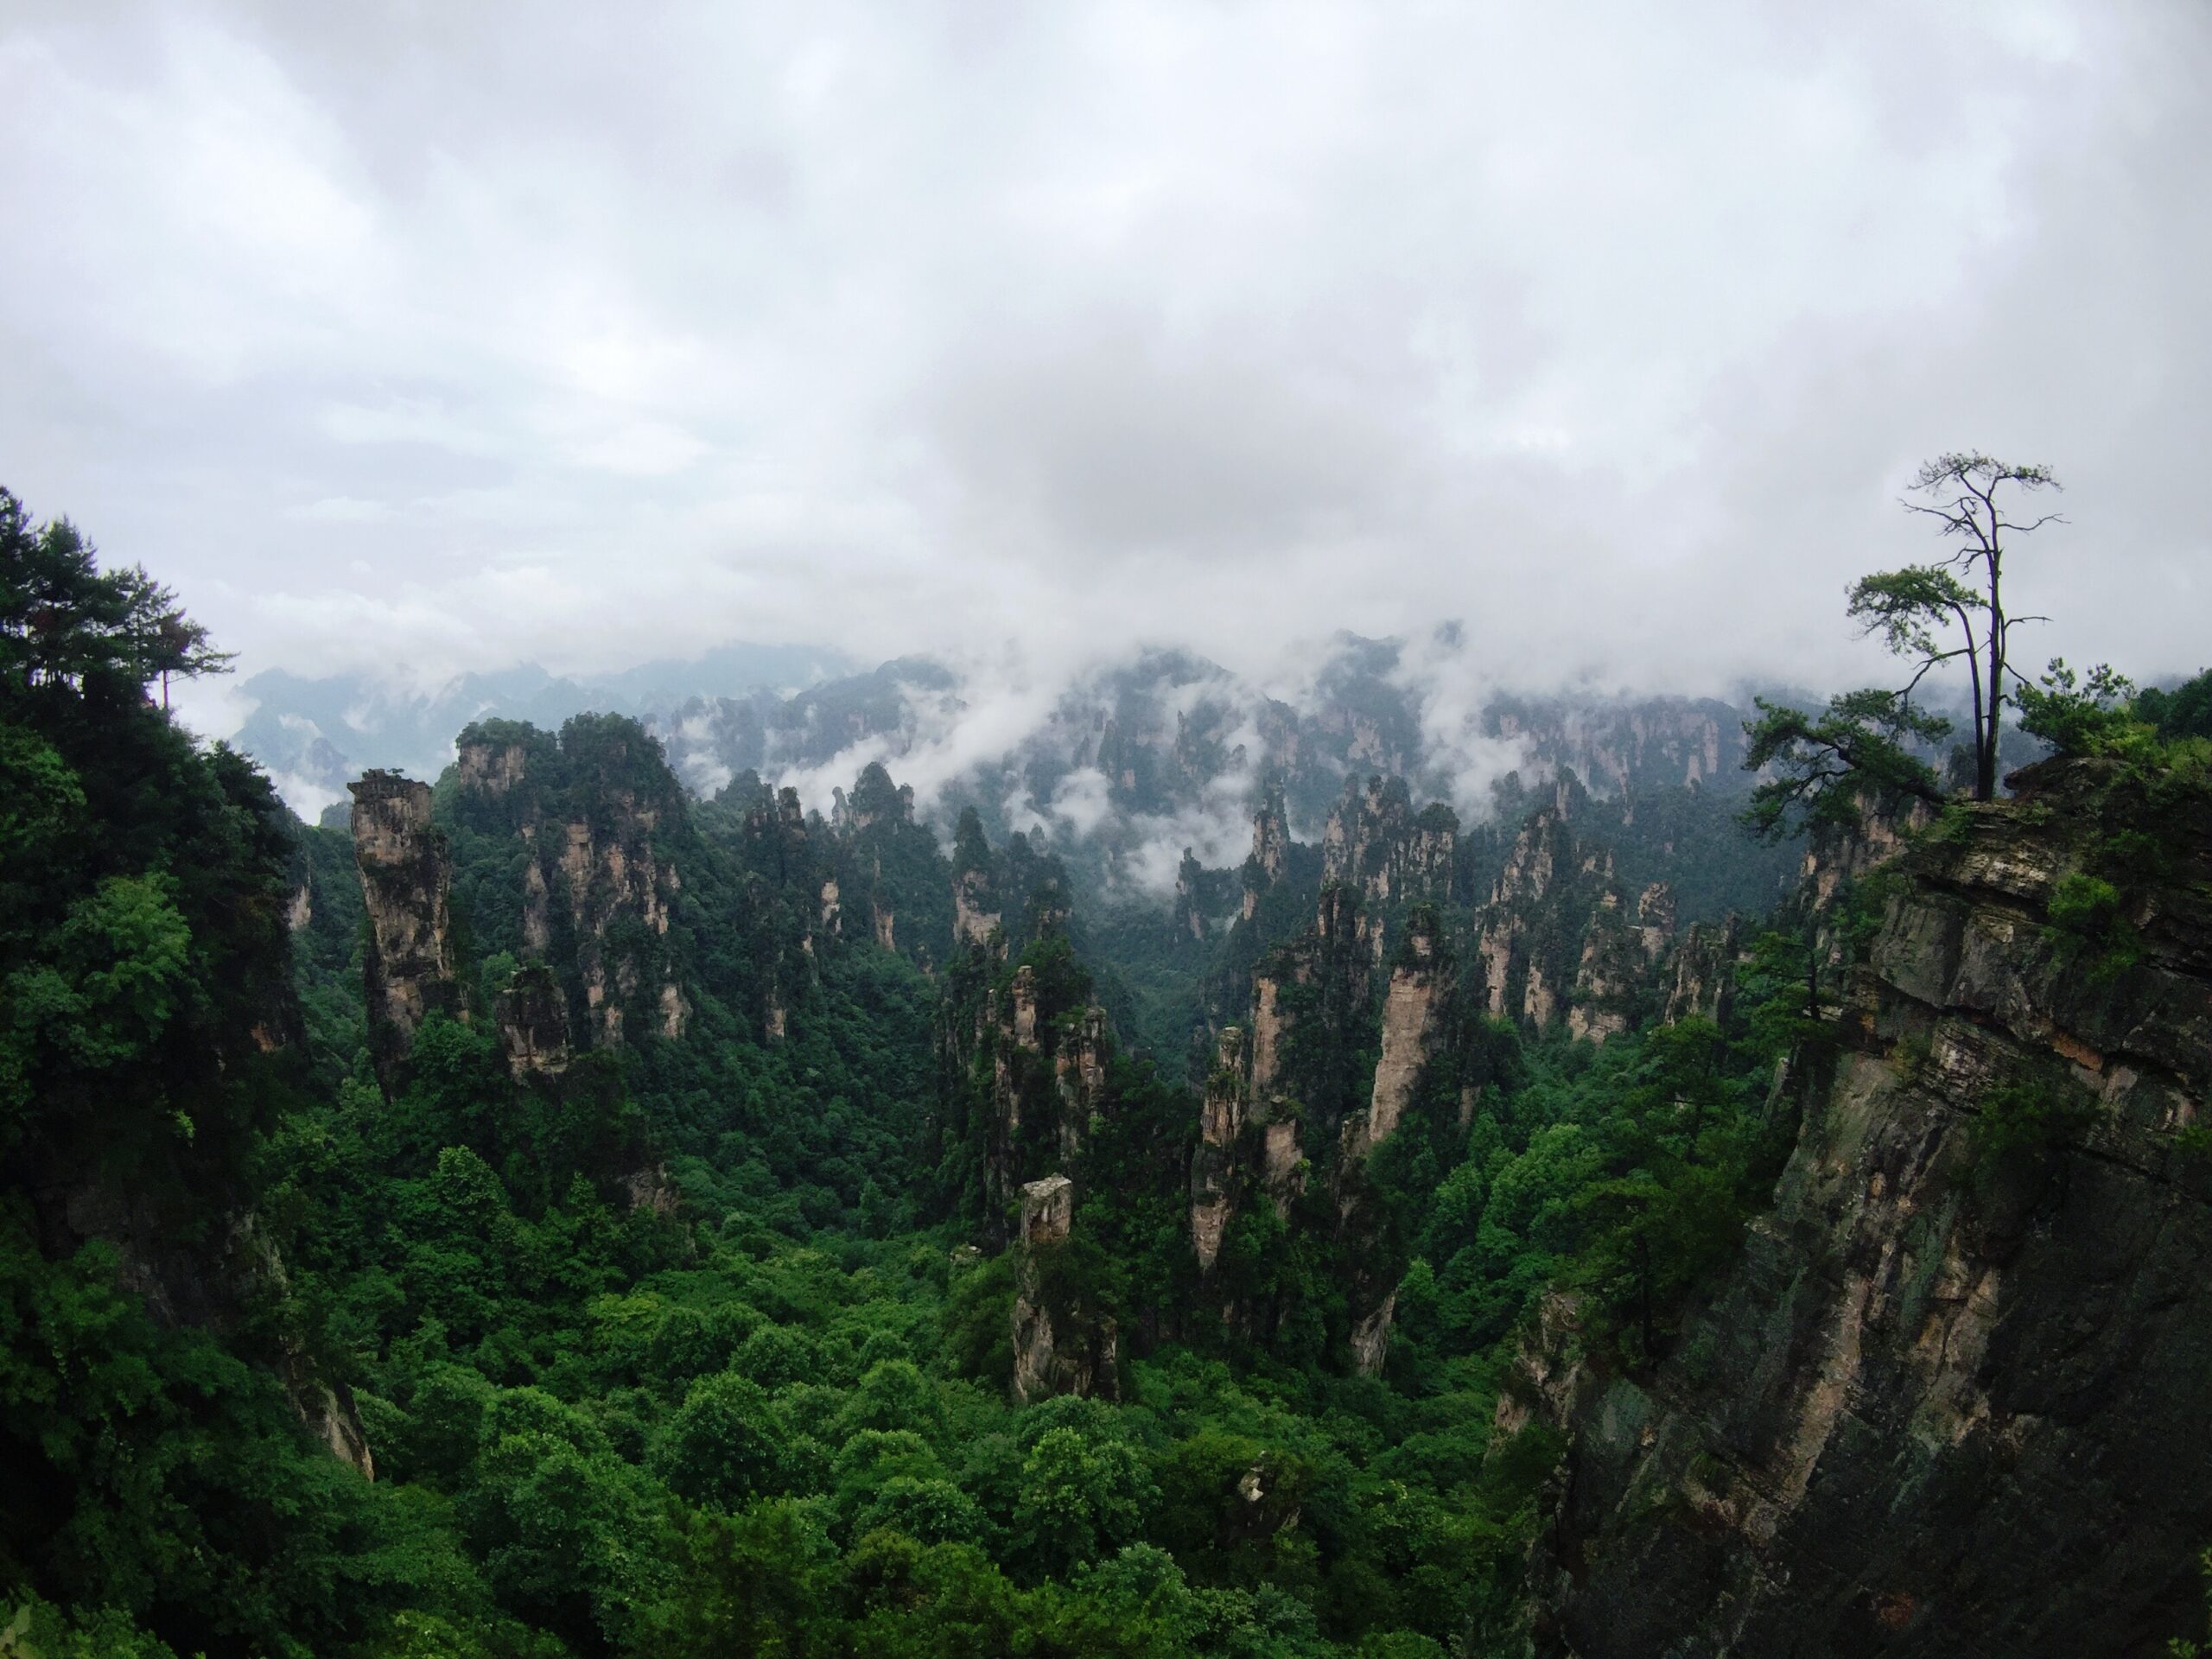 Visiting Zhangjiajie National Forest Park